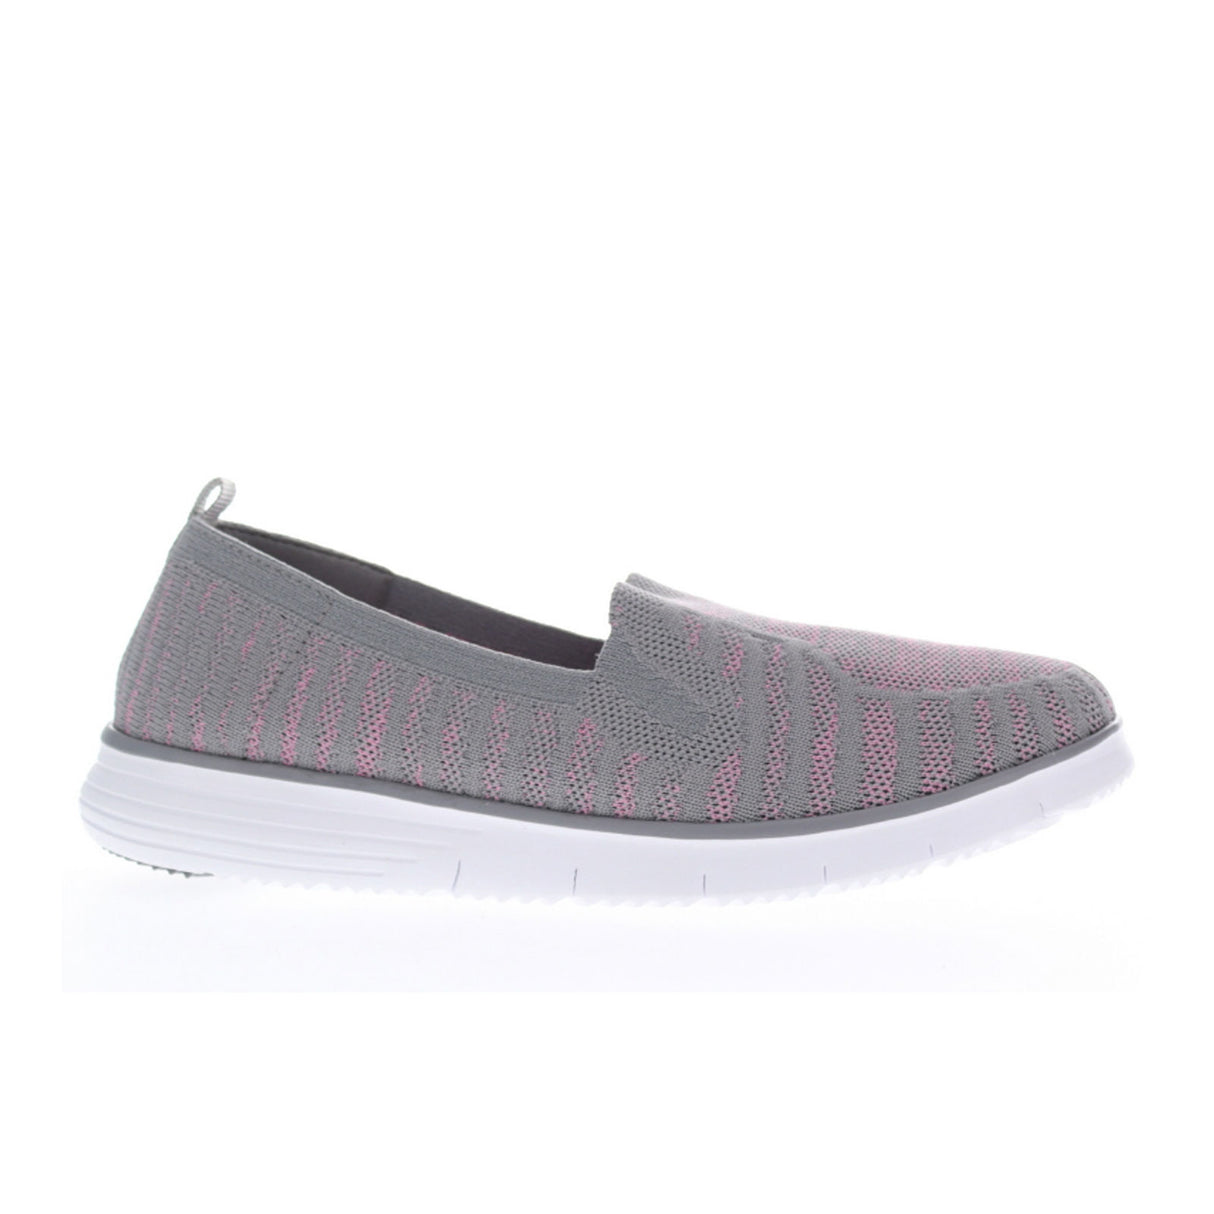 Propet TravelFit Slip On (Women) - Grey/Pink Dress-Casual - Slip Ons - The Heel Shoe Fitters